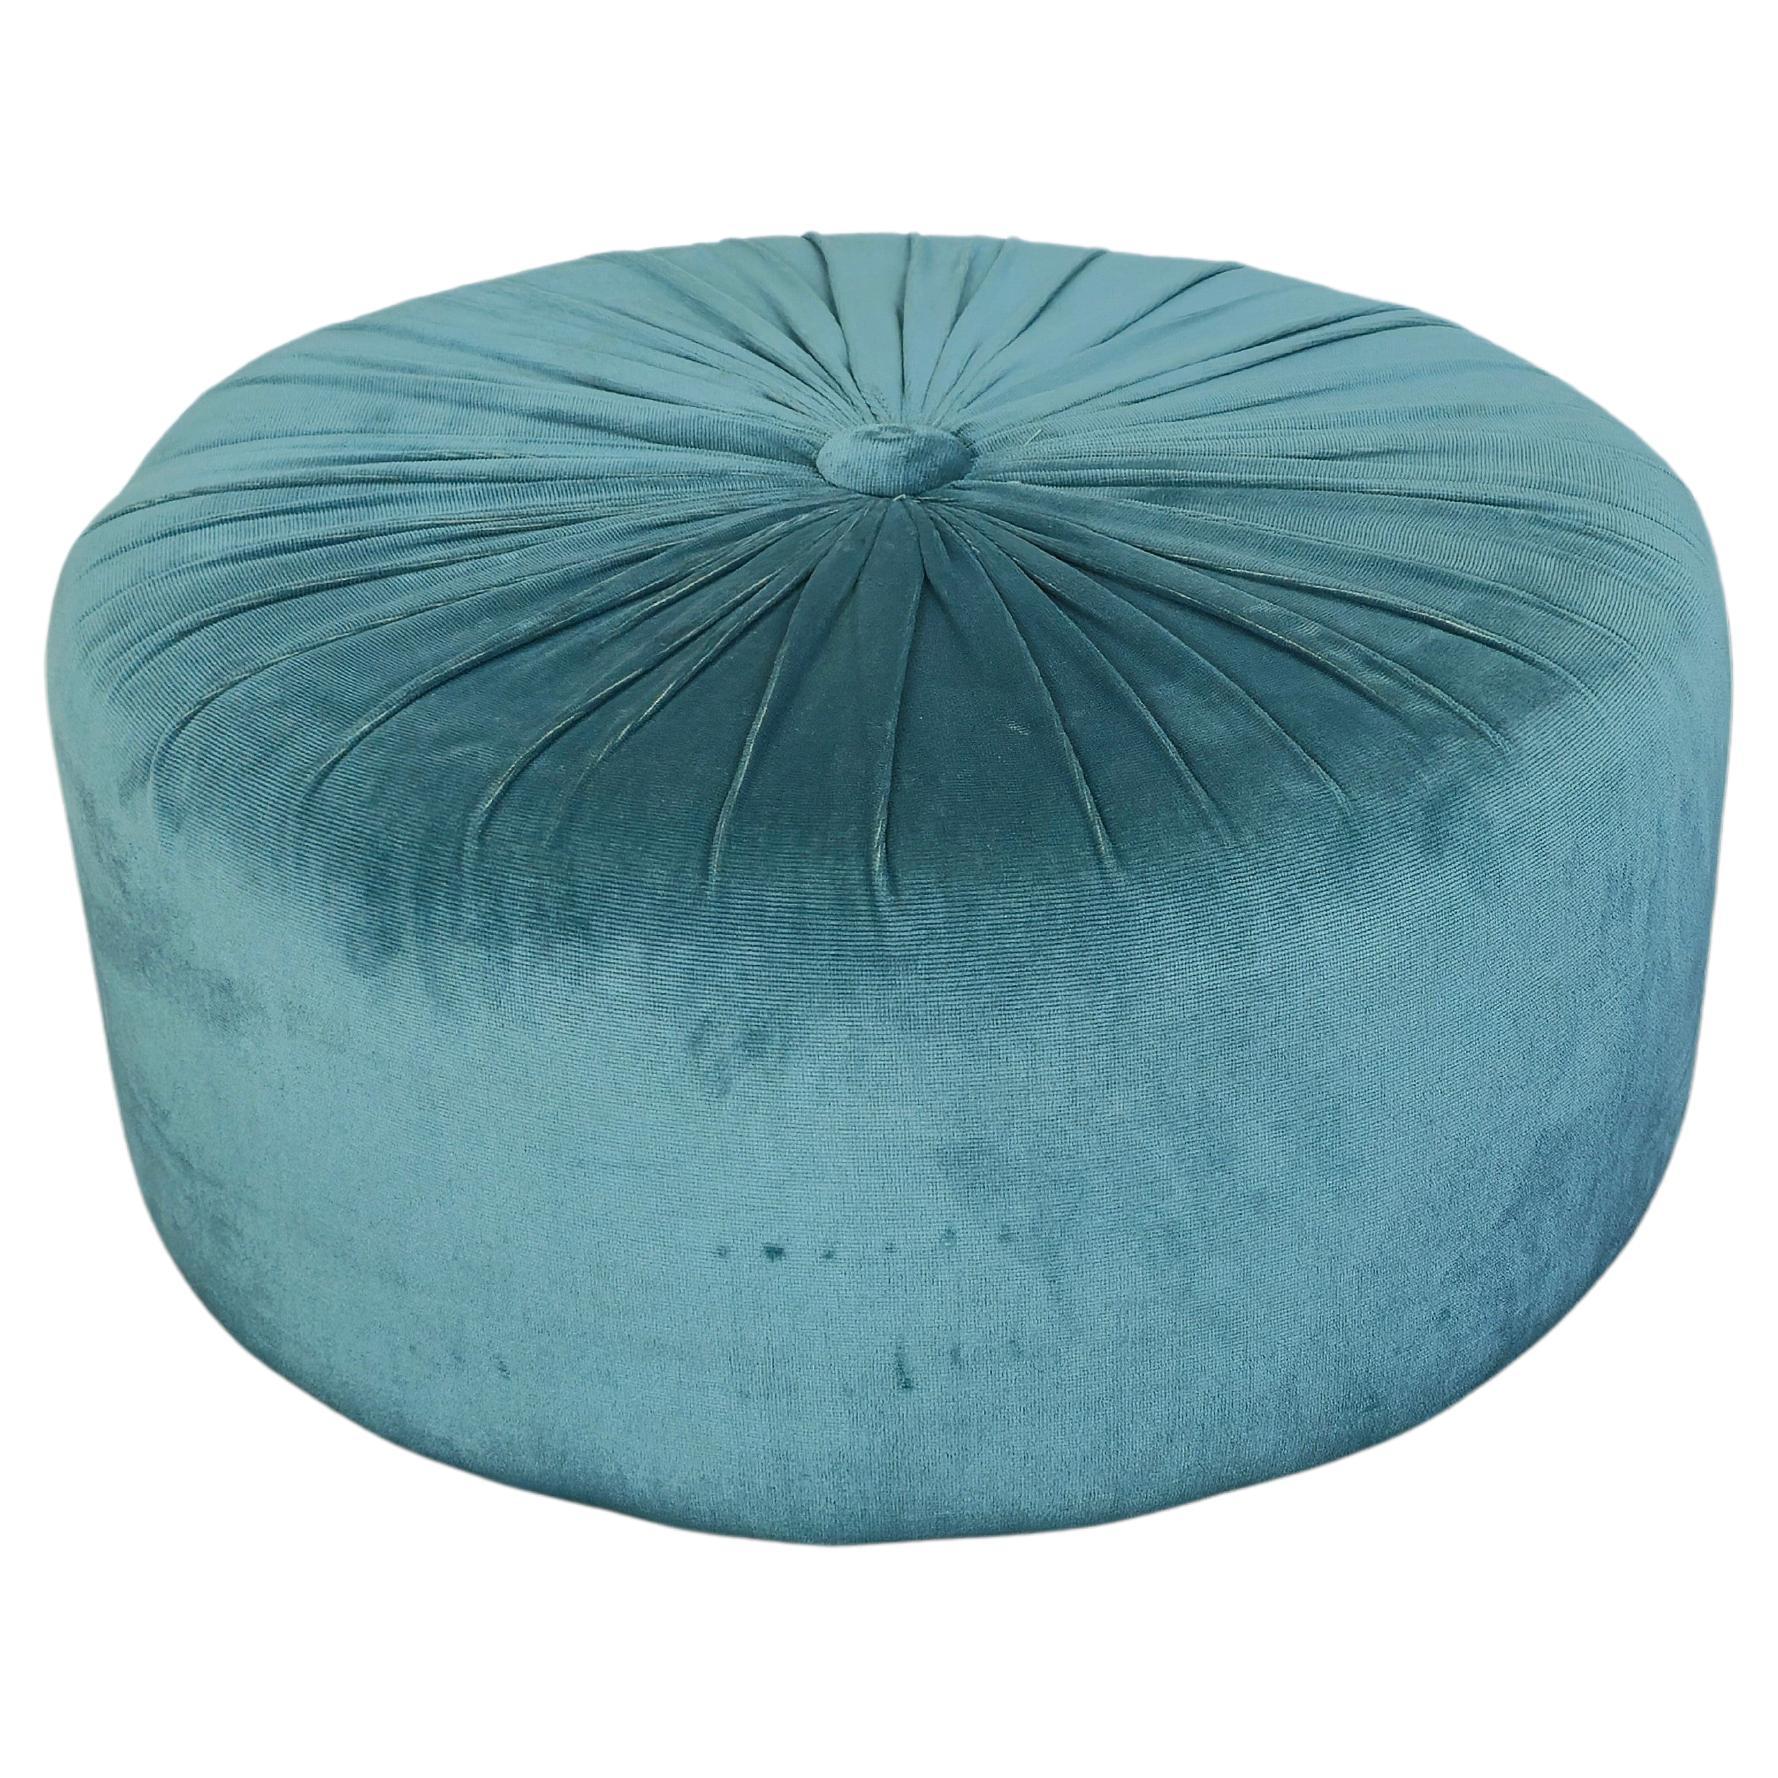 Pouf Turquoise Velvet Smooth Circular Midcentury Modern Italian Design 1960s For Sale